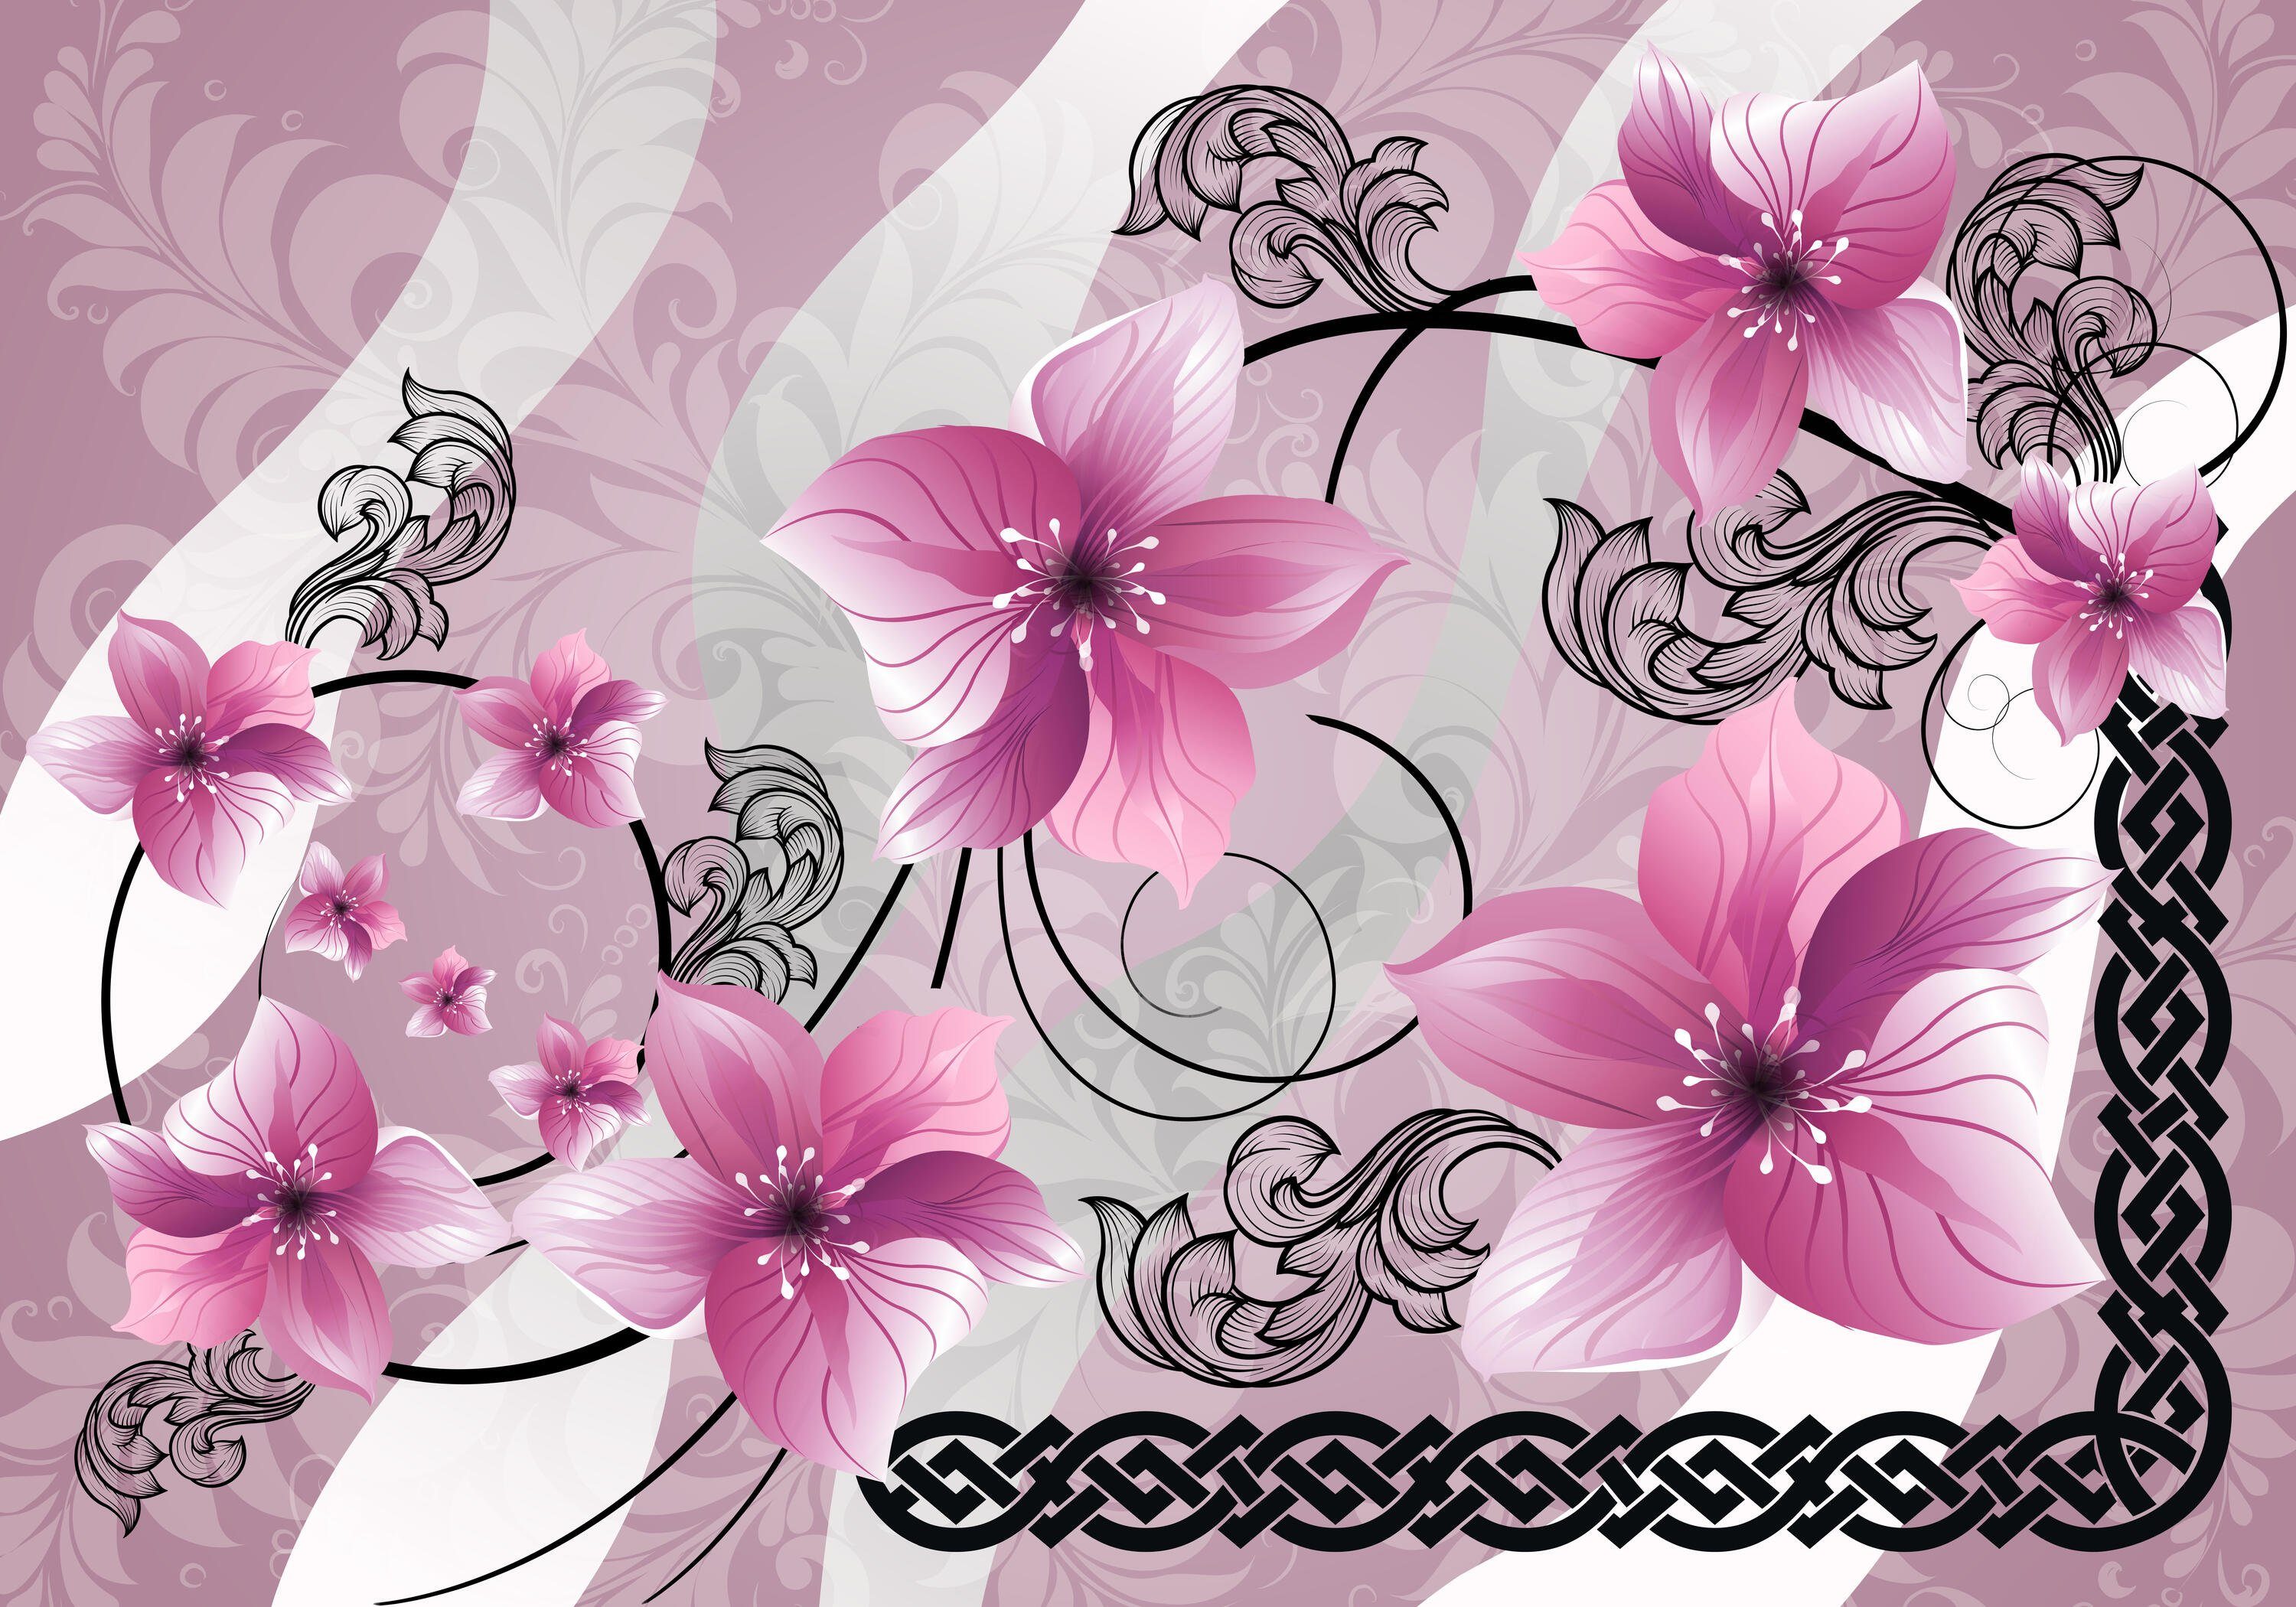 wandmotiv24 Fototapete rosa Blüten Ornamente, glatt, Wandtapete, Motivtapete, matt, Vliestapete